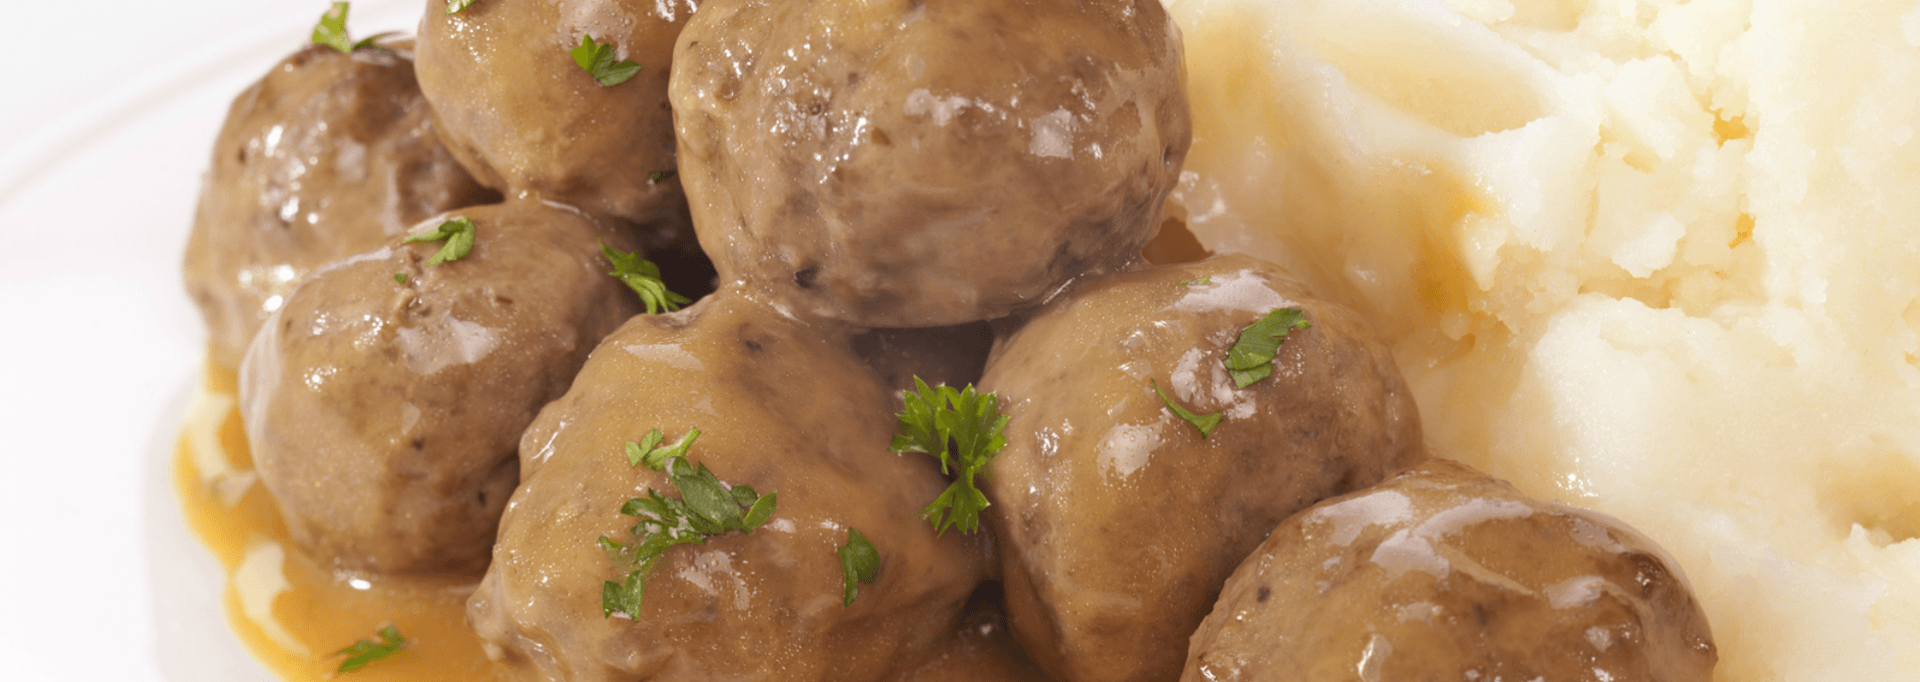 Homemade Swedish Meatballs